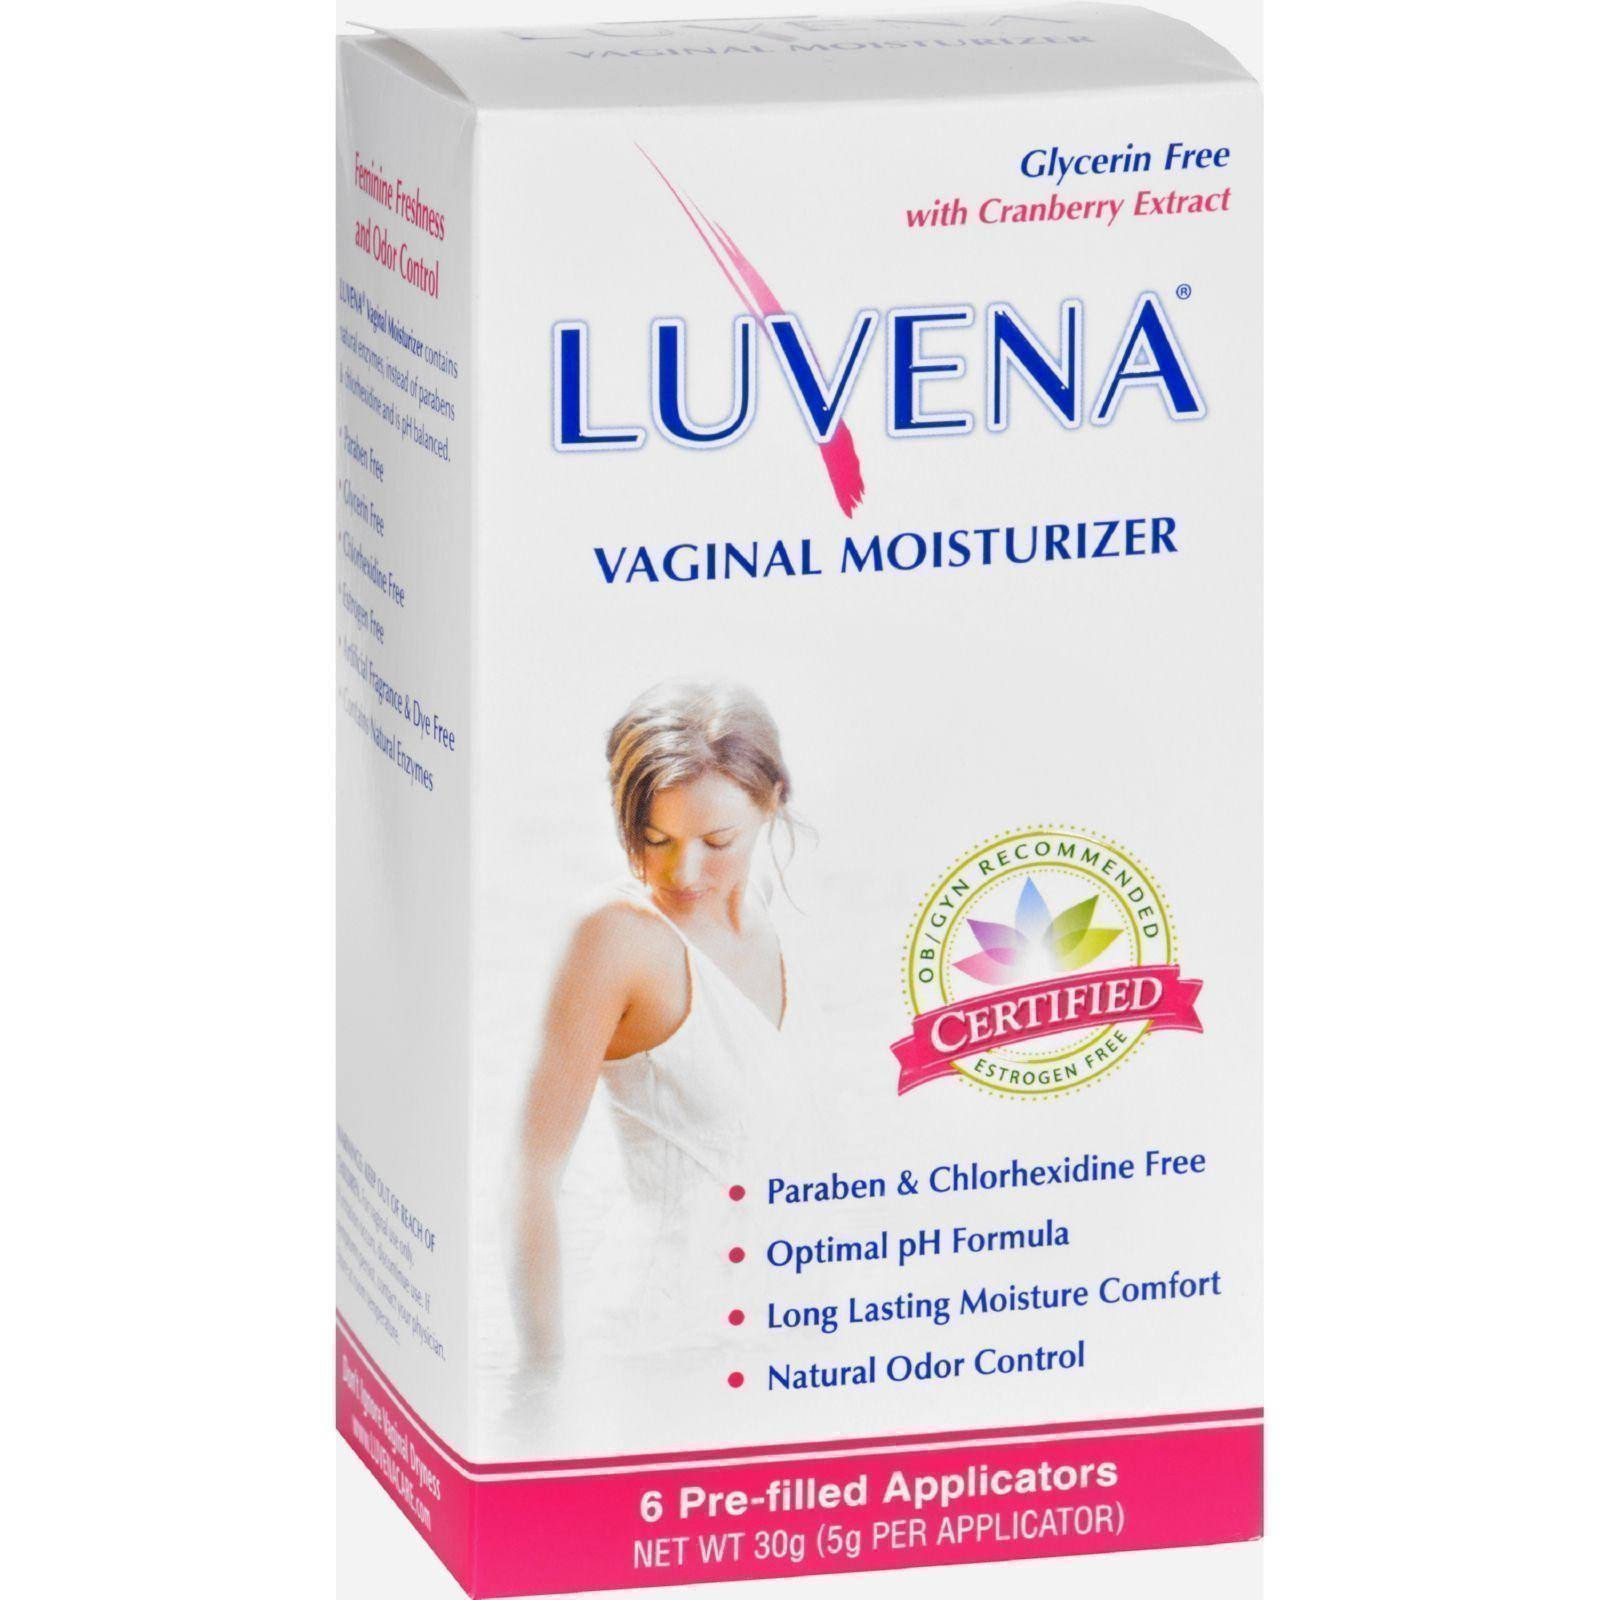 Luvena Vaginal Moisturizer and Lubricant - 5g